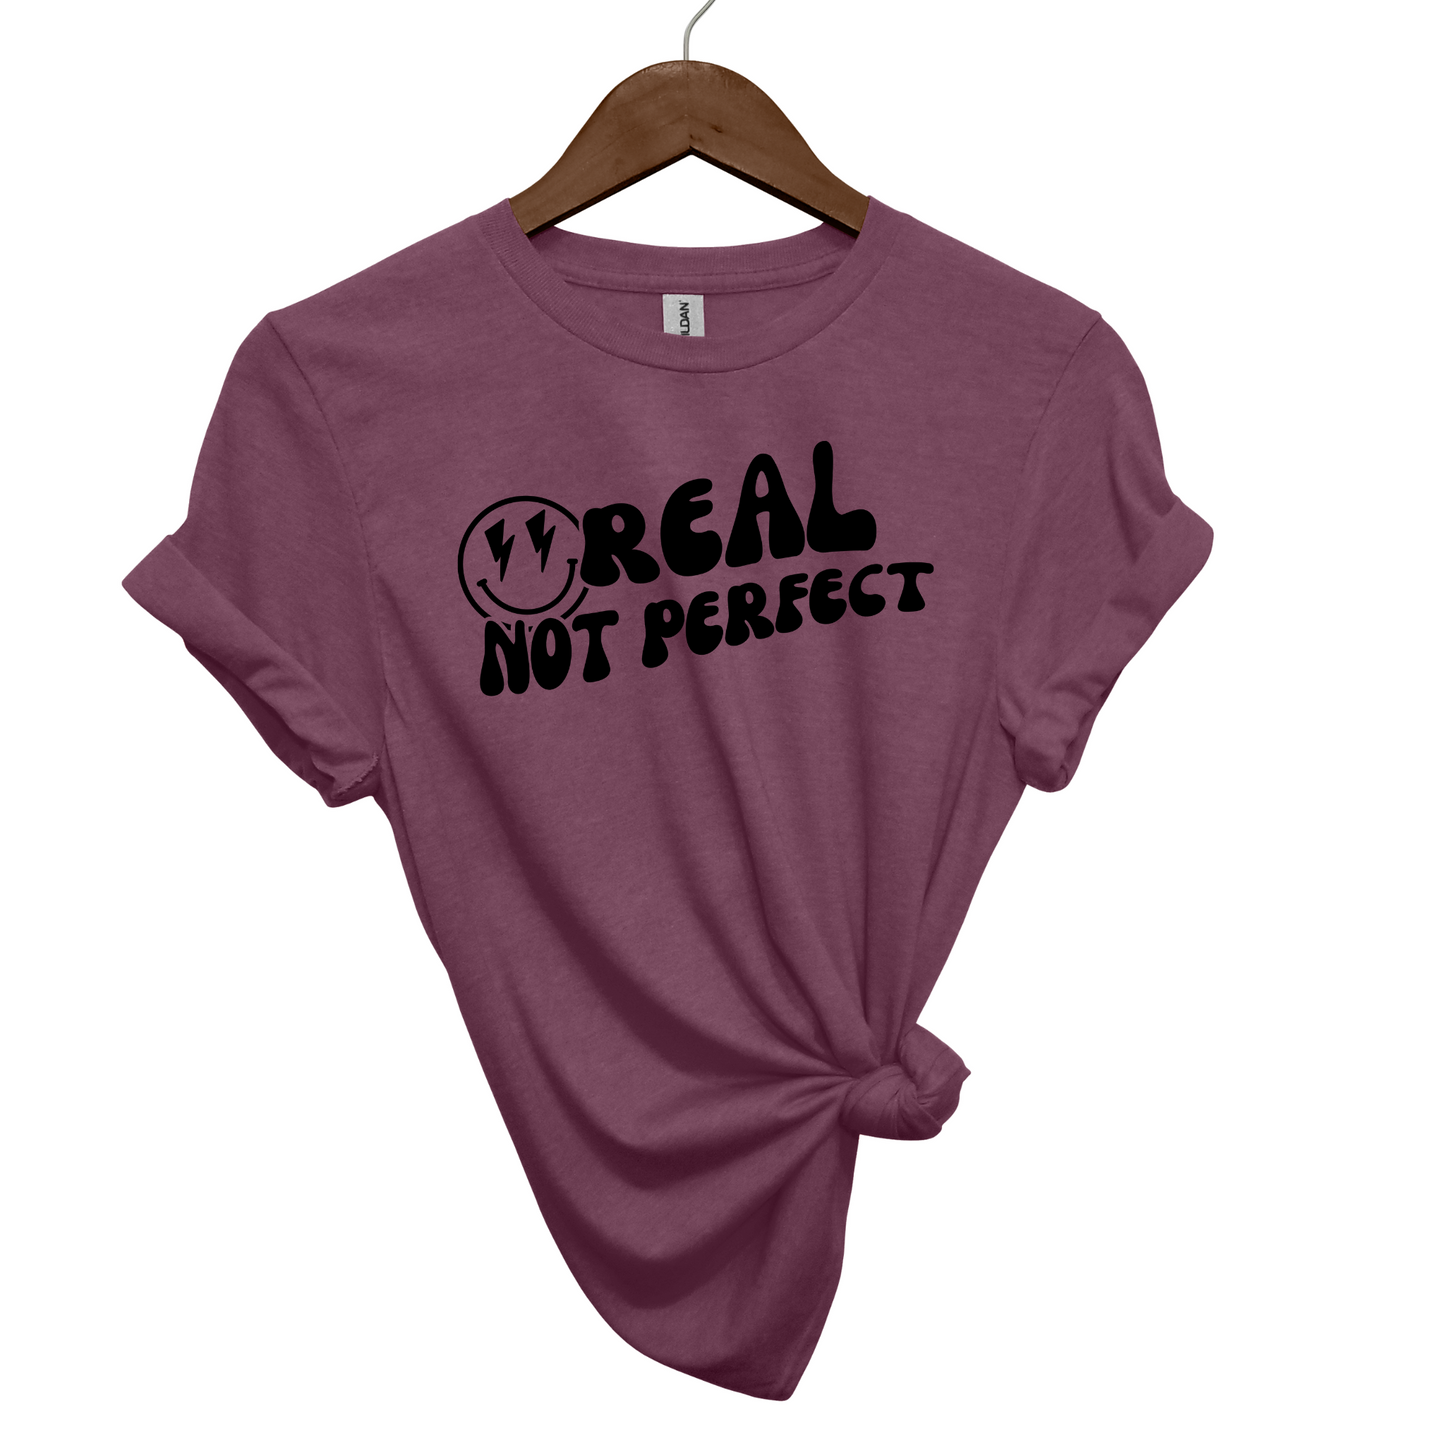 Real, Not Perfect Crewneck T Shirt heather maroon